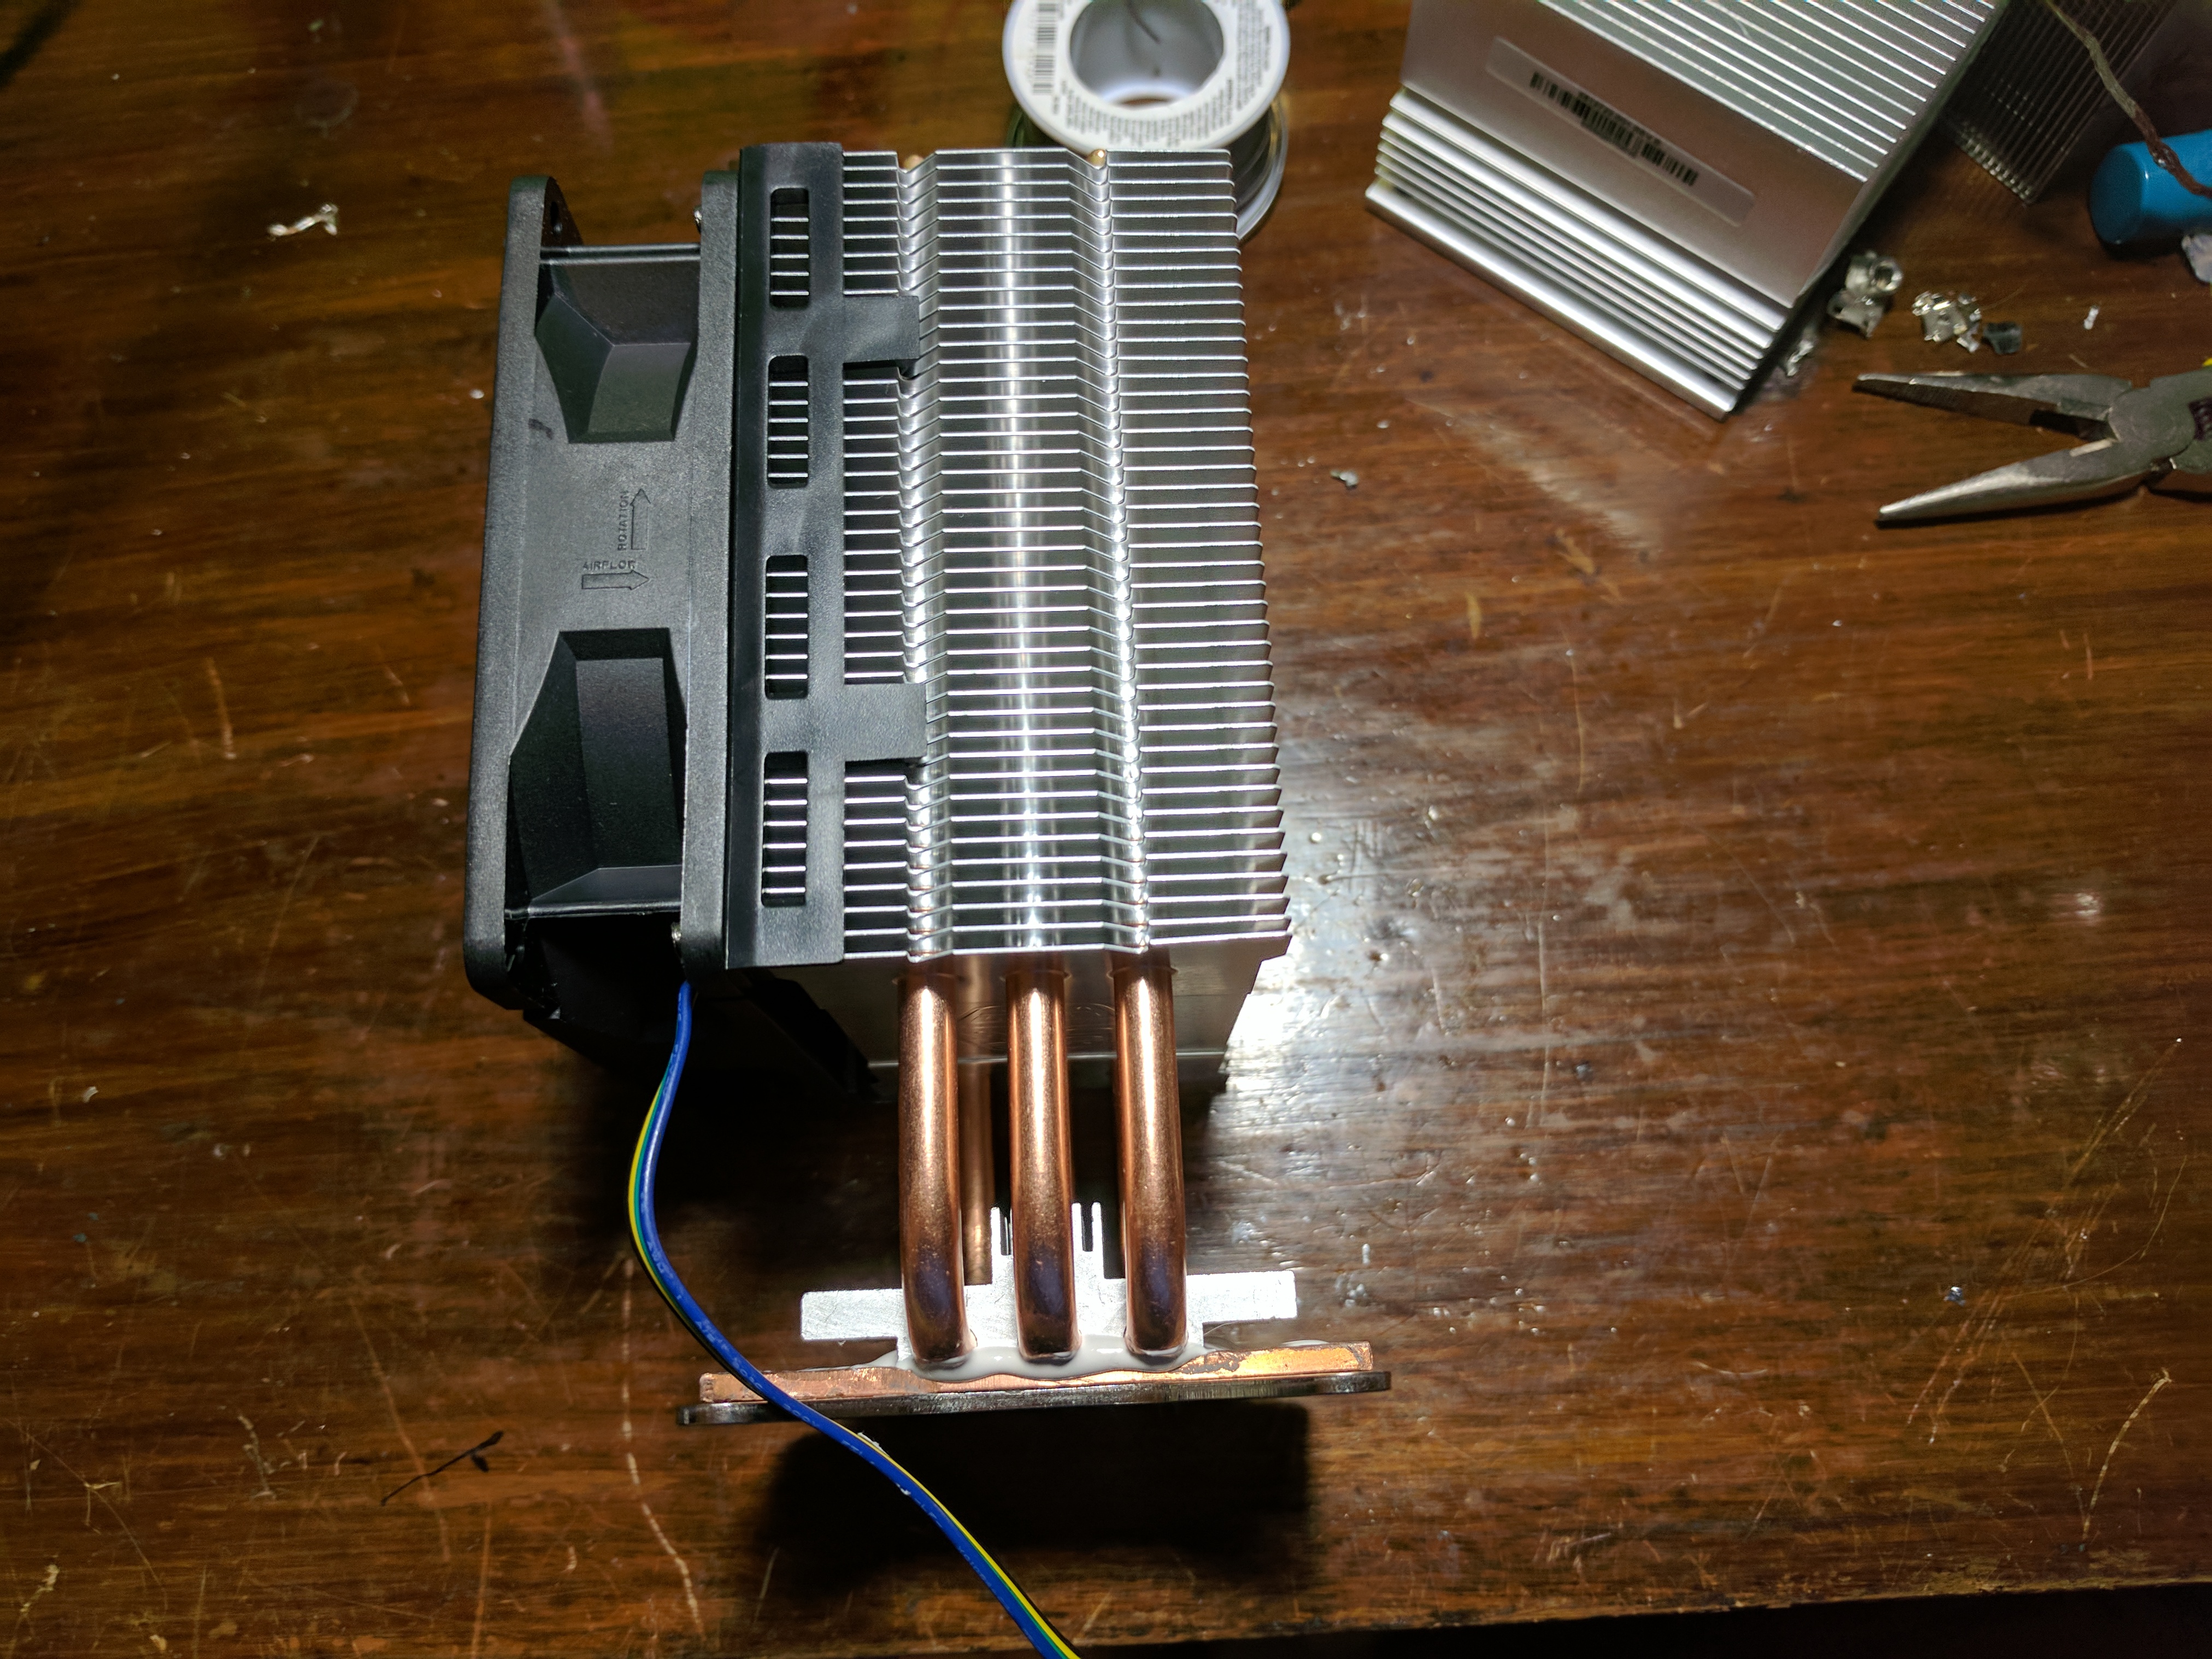 Installing a PC heatsink onto an Xbox 360